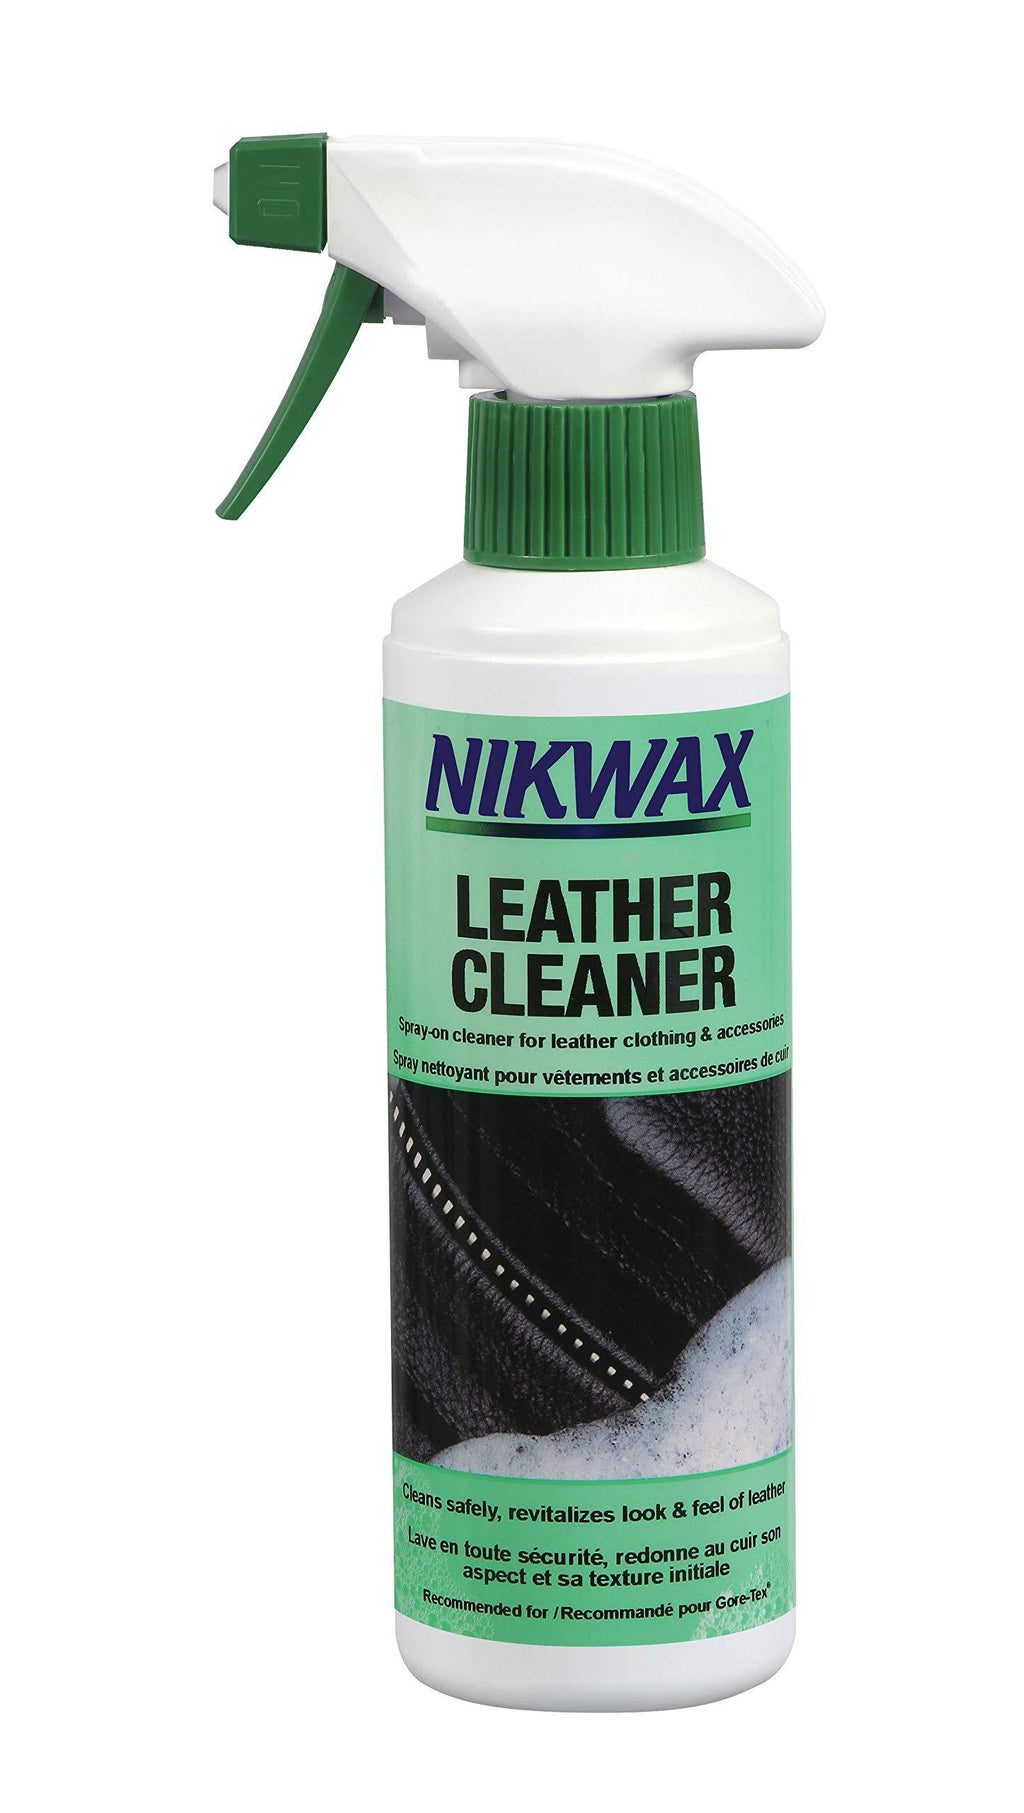  [AUSTRALIA] - Nikwax Leather Cleaner, 300ml